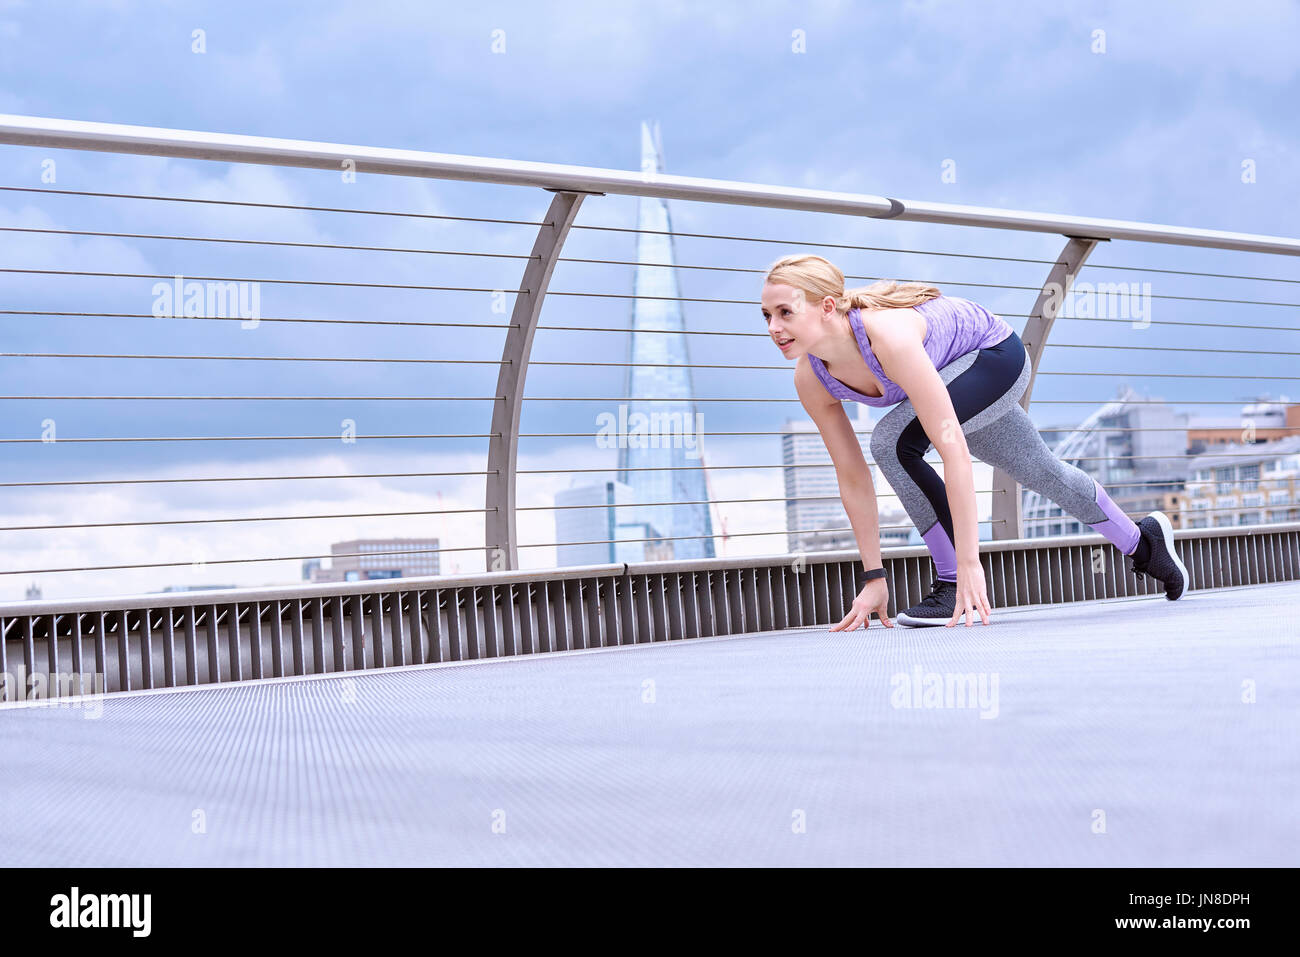 A young woman prepares to sprint on the Millennium Footbridge Stock Photo